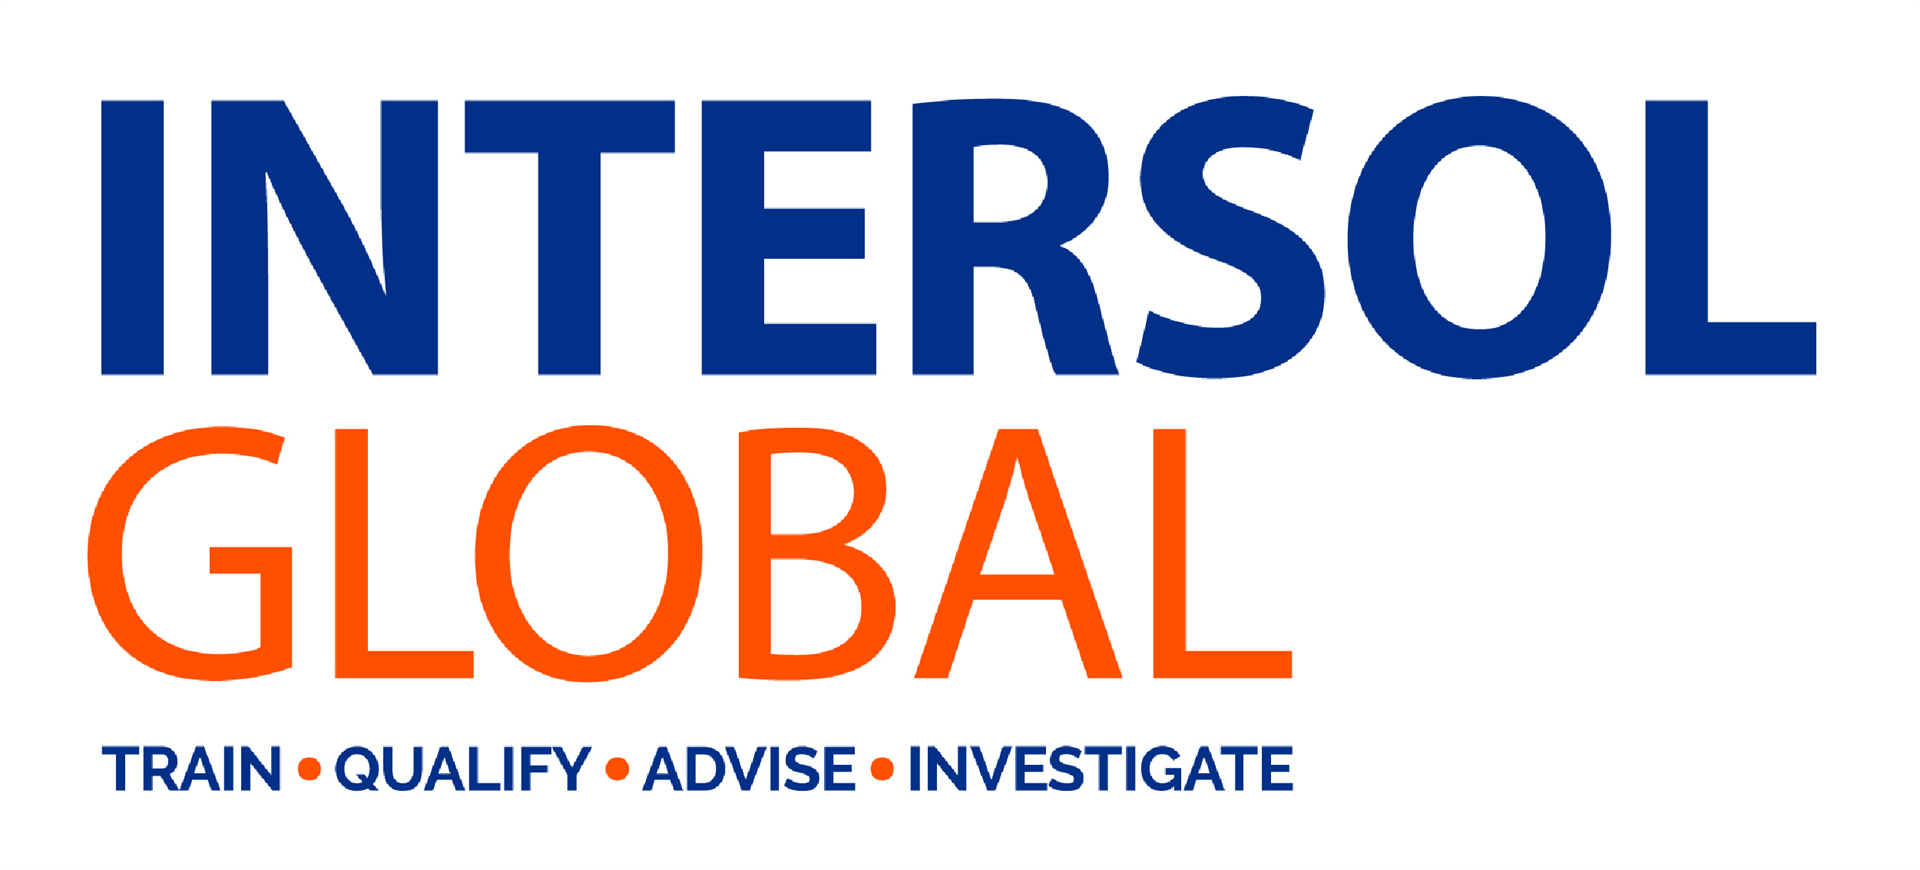 Intersol Global